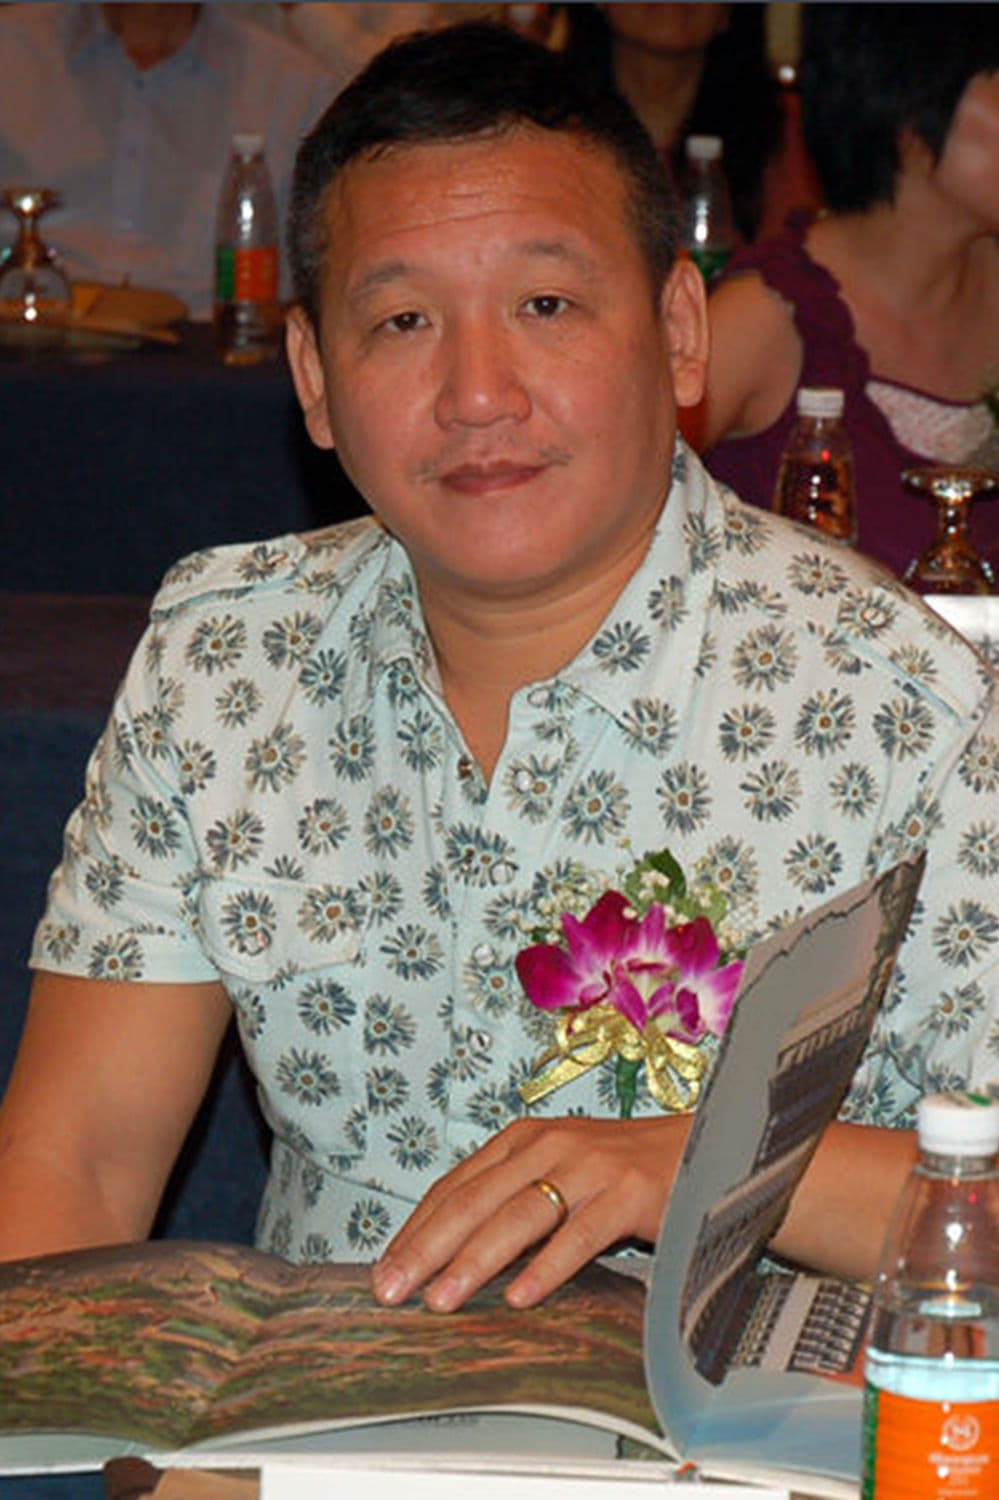 Joe Cheng